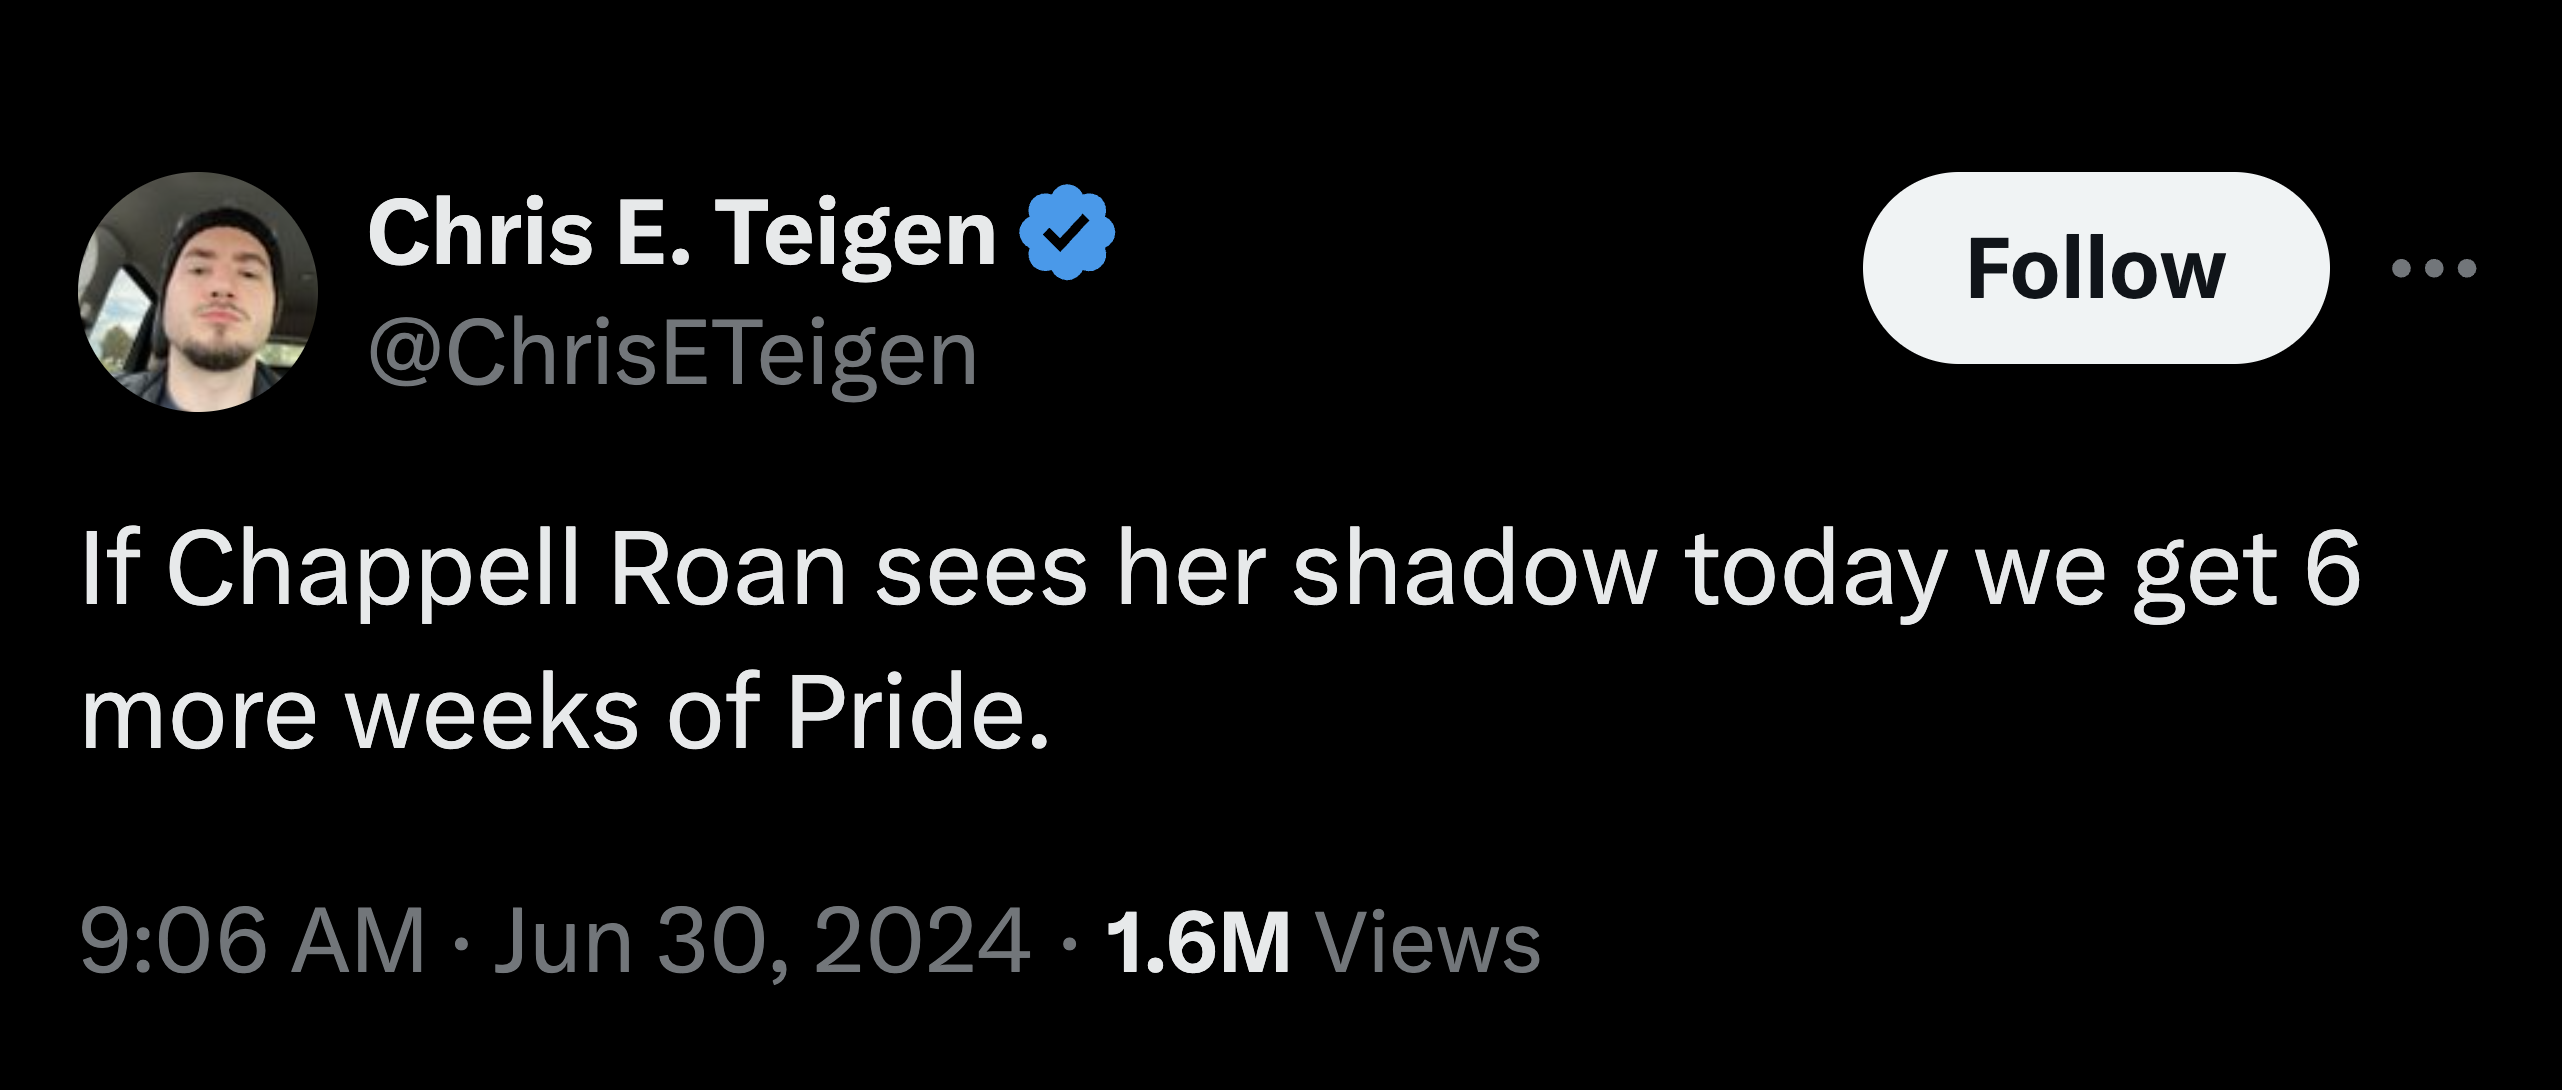 screenshot - Chris E. Teigen If Chappell Roan sees her shadow today we get 6 more weeks of Pride. 1.6M Views